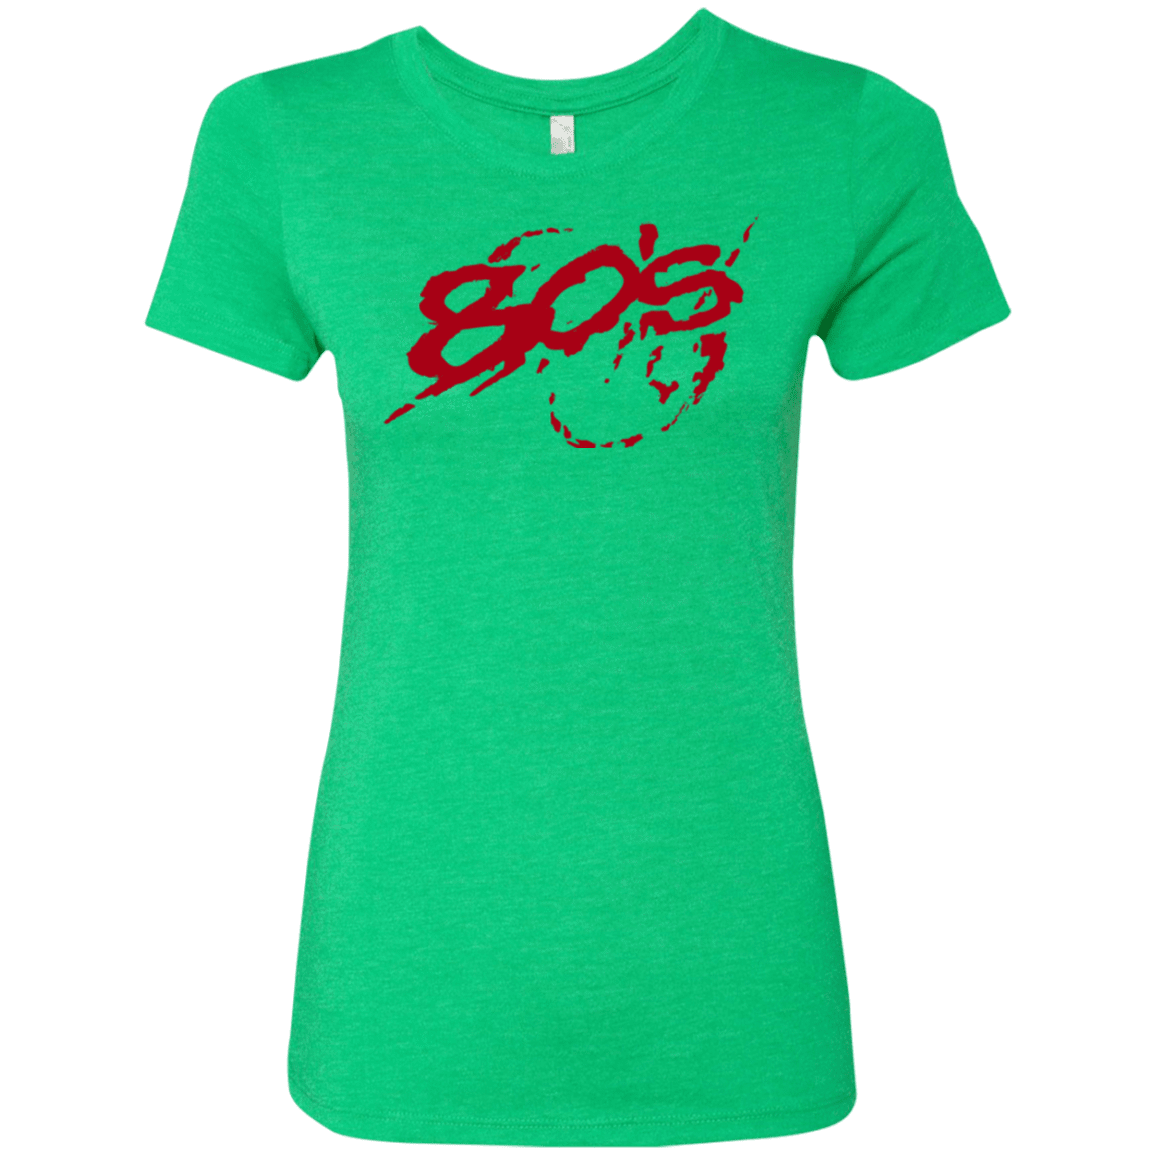 T-Shirts Envy / Small 80s 300 Women's Triblend T-Shirt